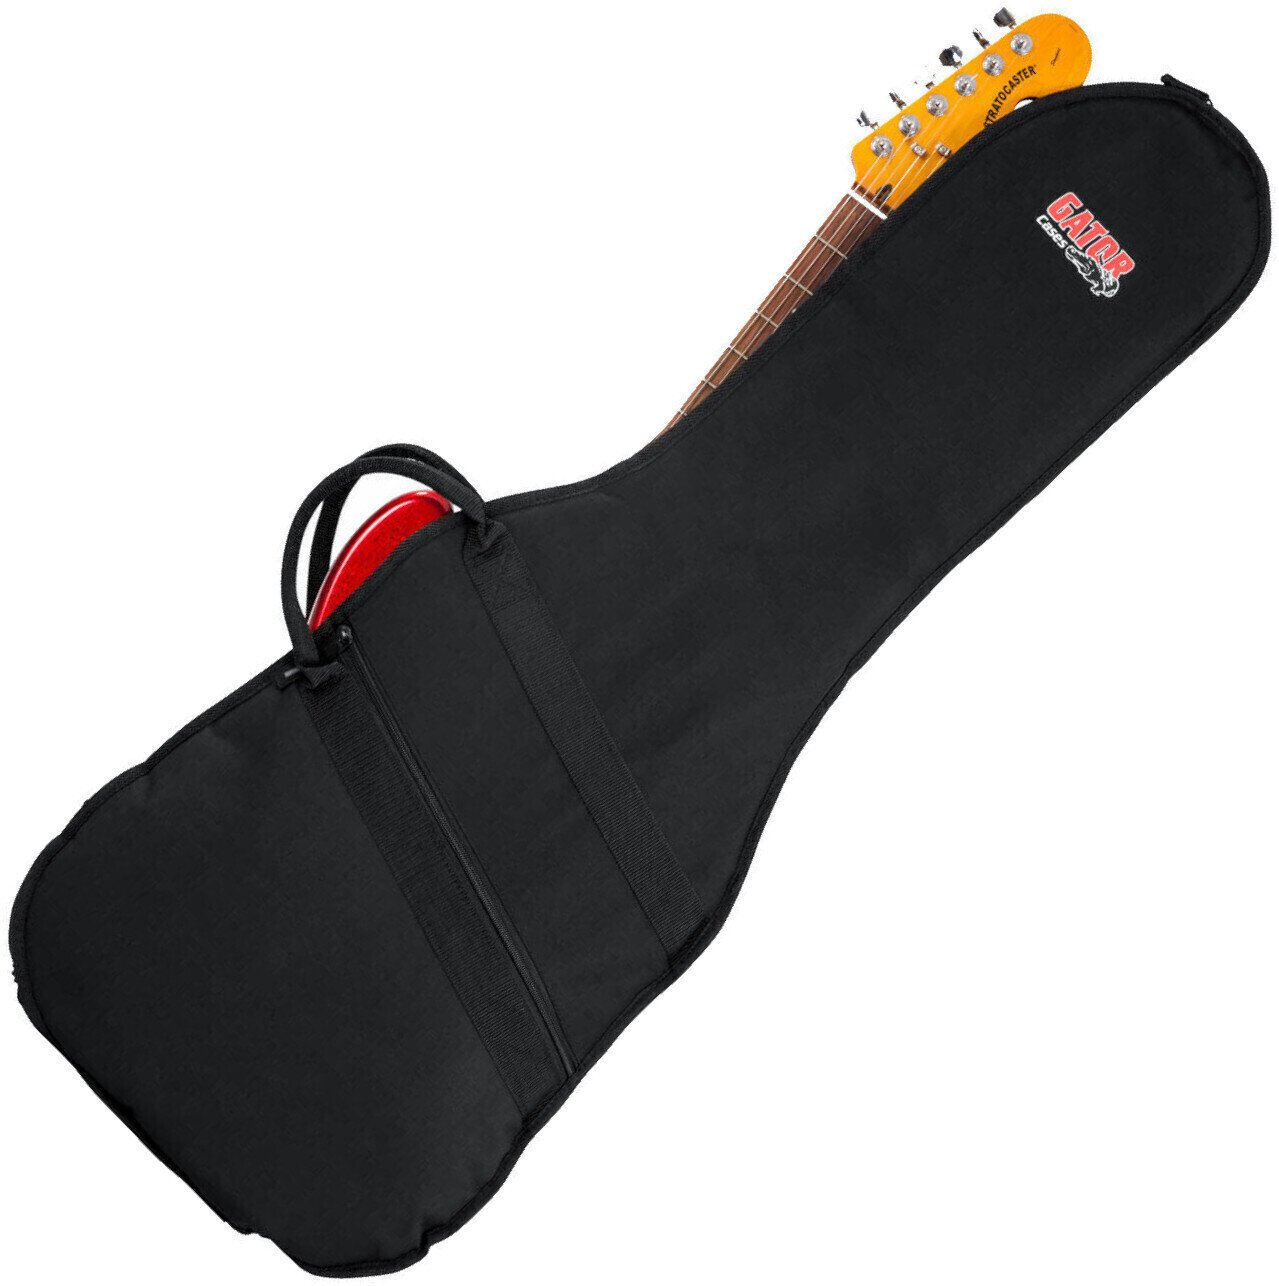 Tasche für E-Gitarre Gator GBE-ELECT Tasche für E-Gitarre